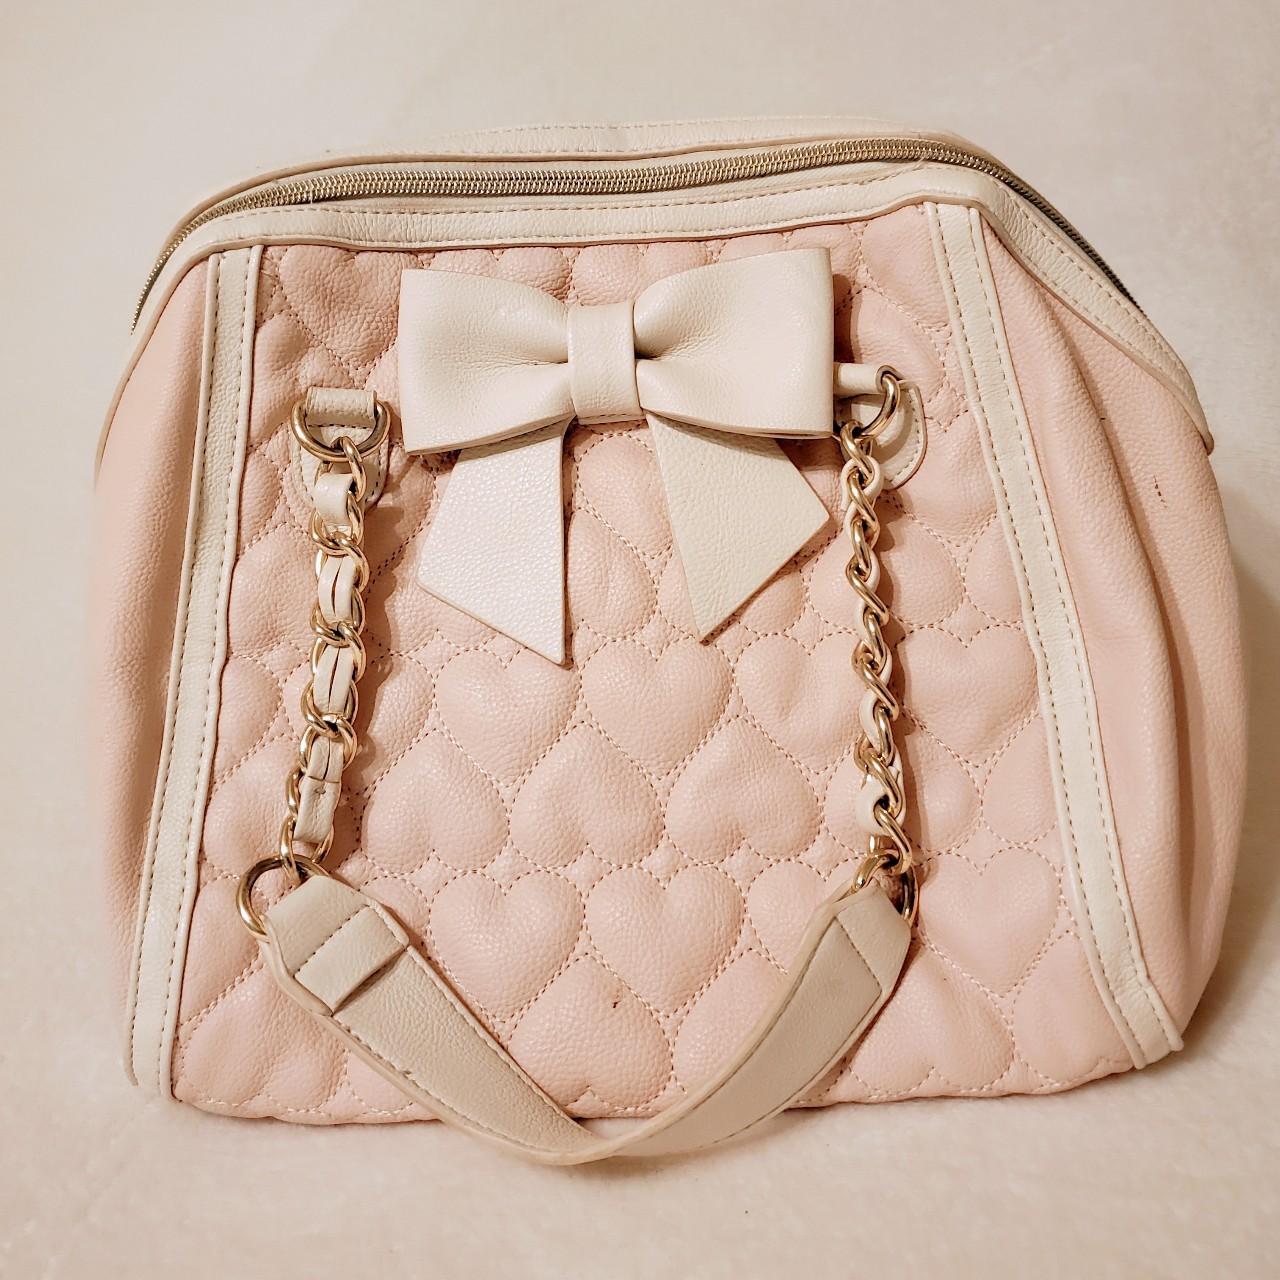 BETSEY JOHNSON Black Pink Heart Double Handle Barrel Bag Purse | eBay